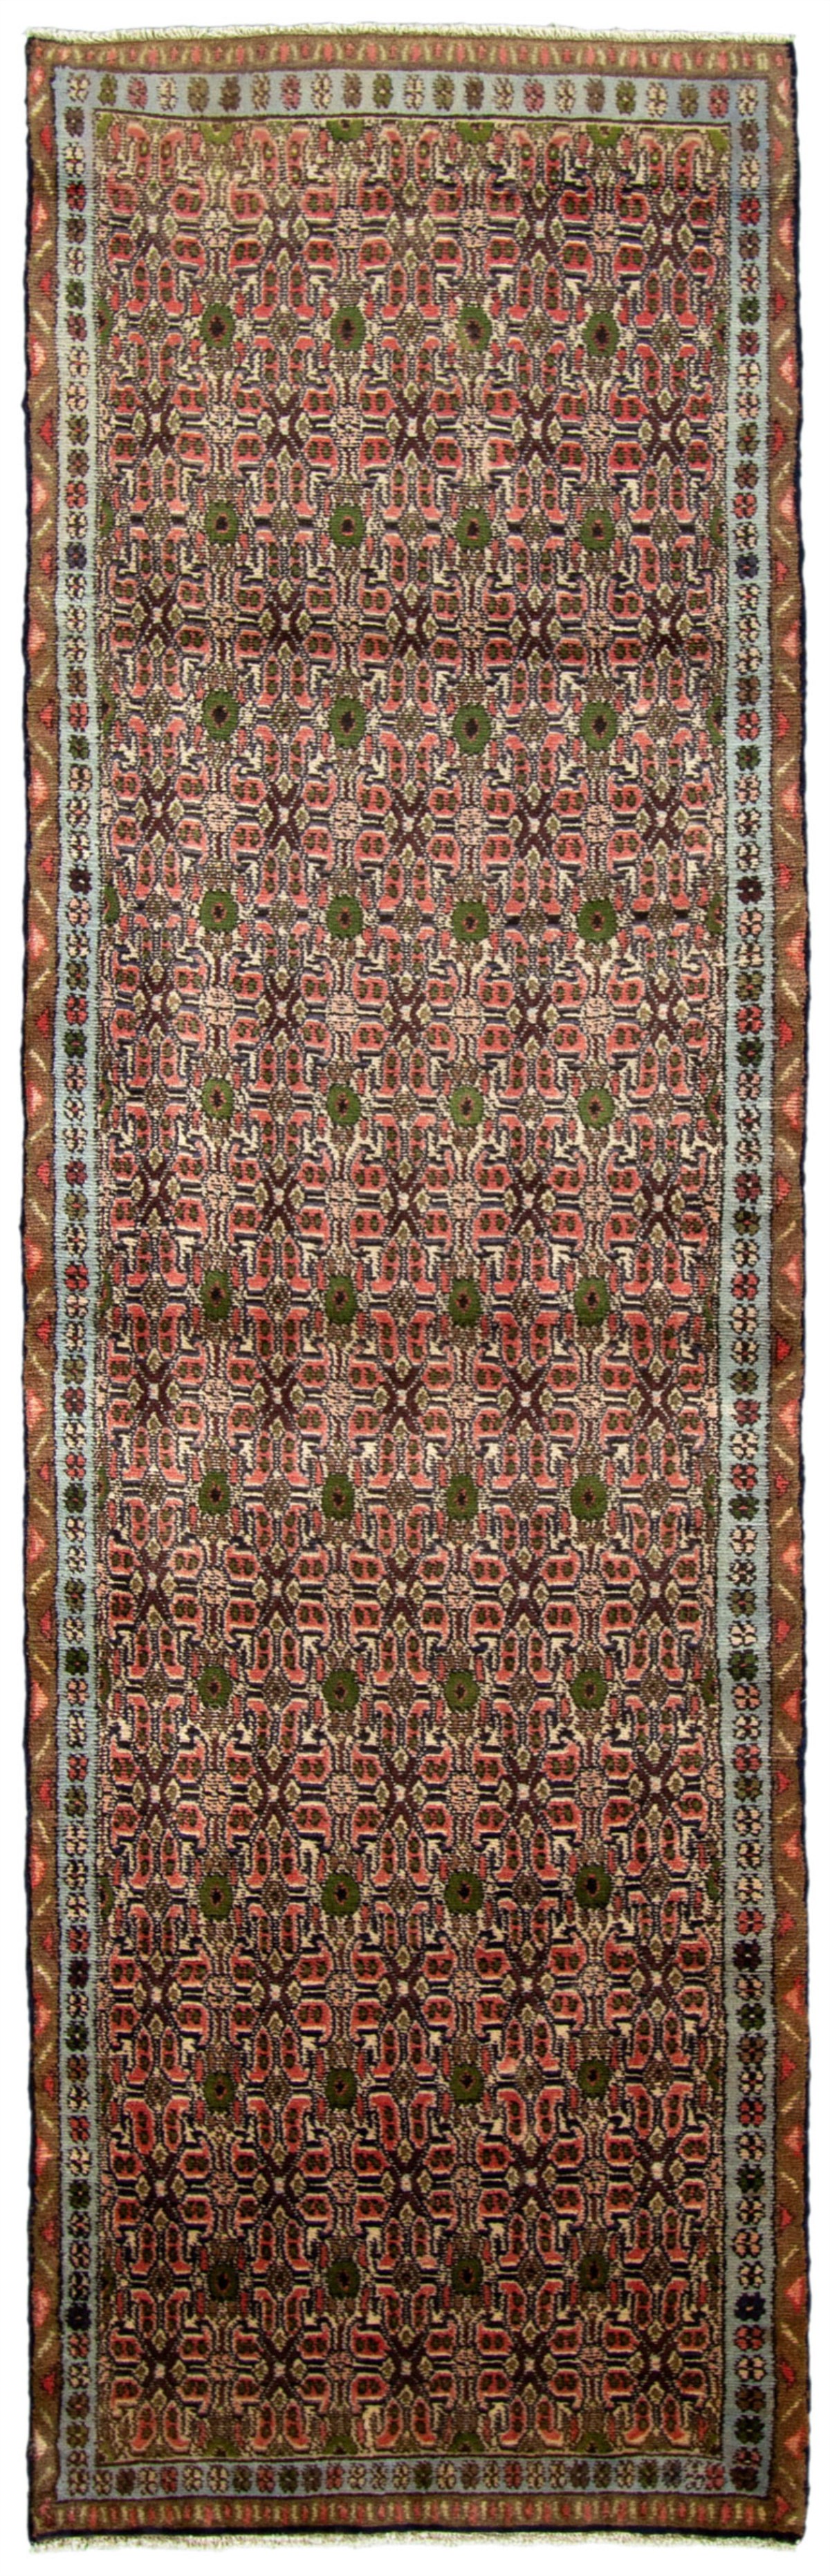 Hand-knotted Koliai Dark Copper, Green Wool Rug 2'10" x 9'9" Size: 2'10" x 9'9"  